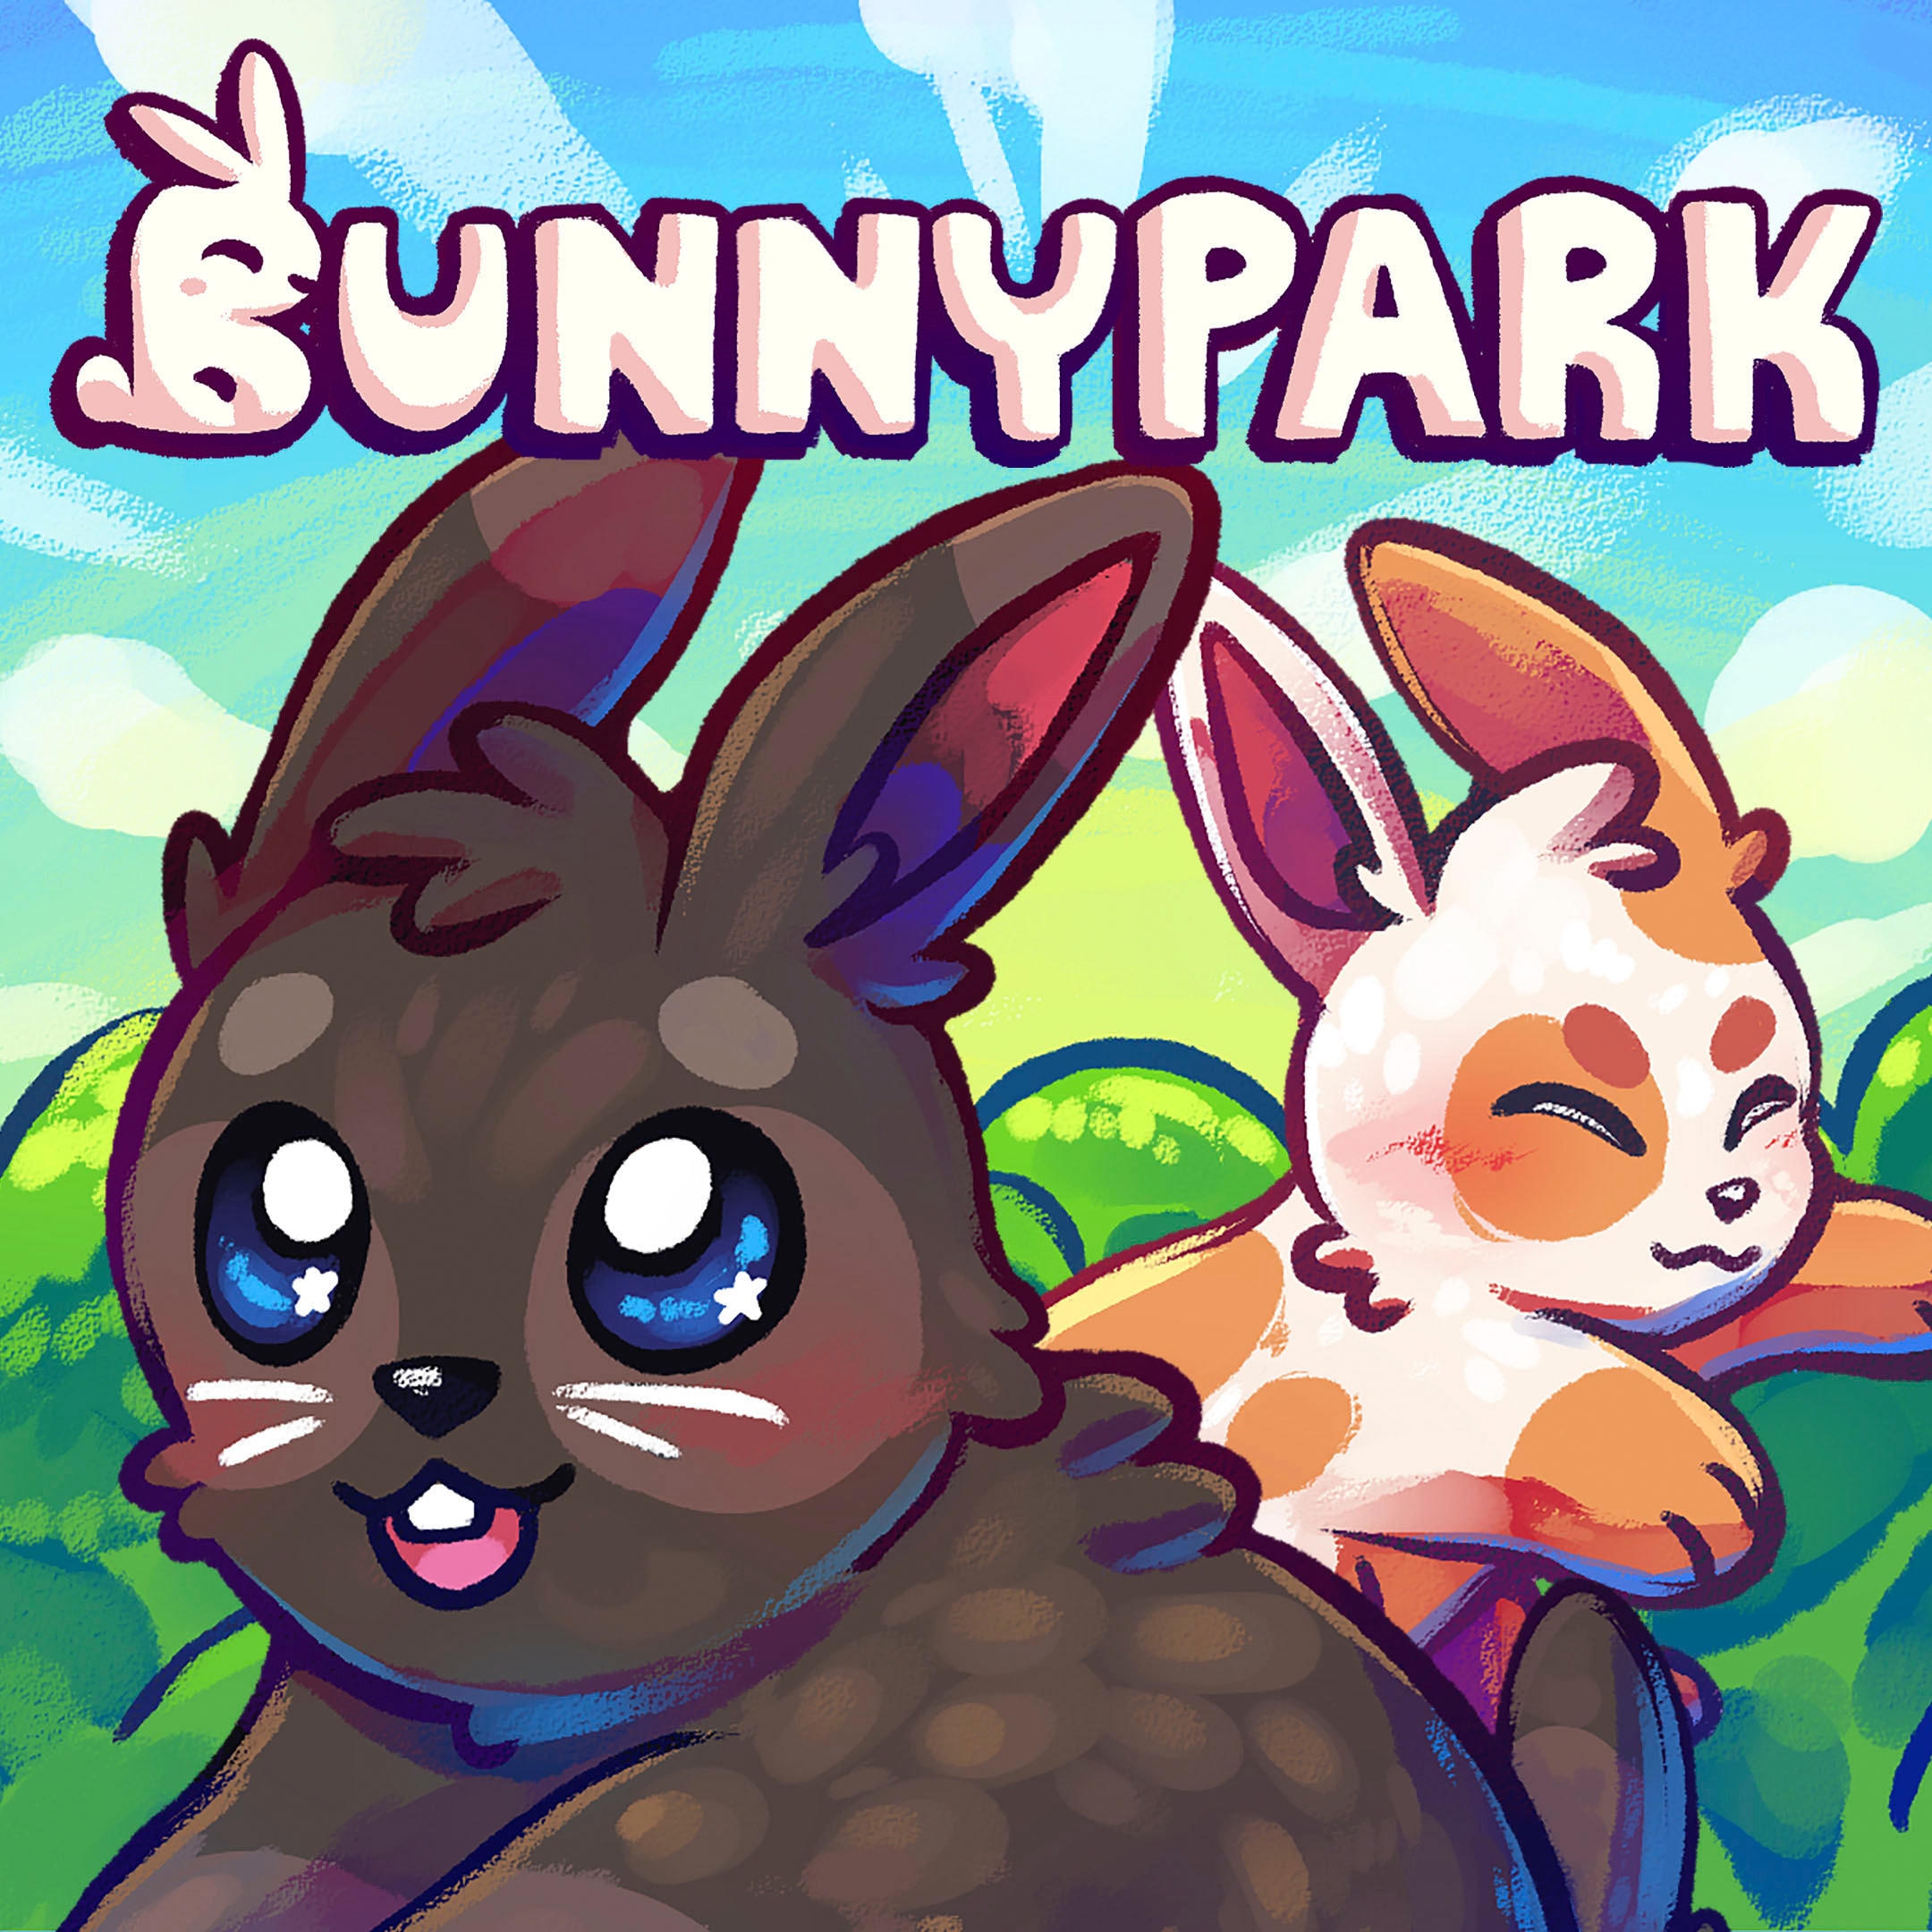 NBG Spielesoftware »Bunny Park«, Nintendo Switch